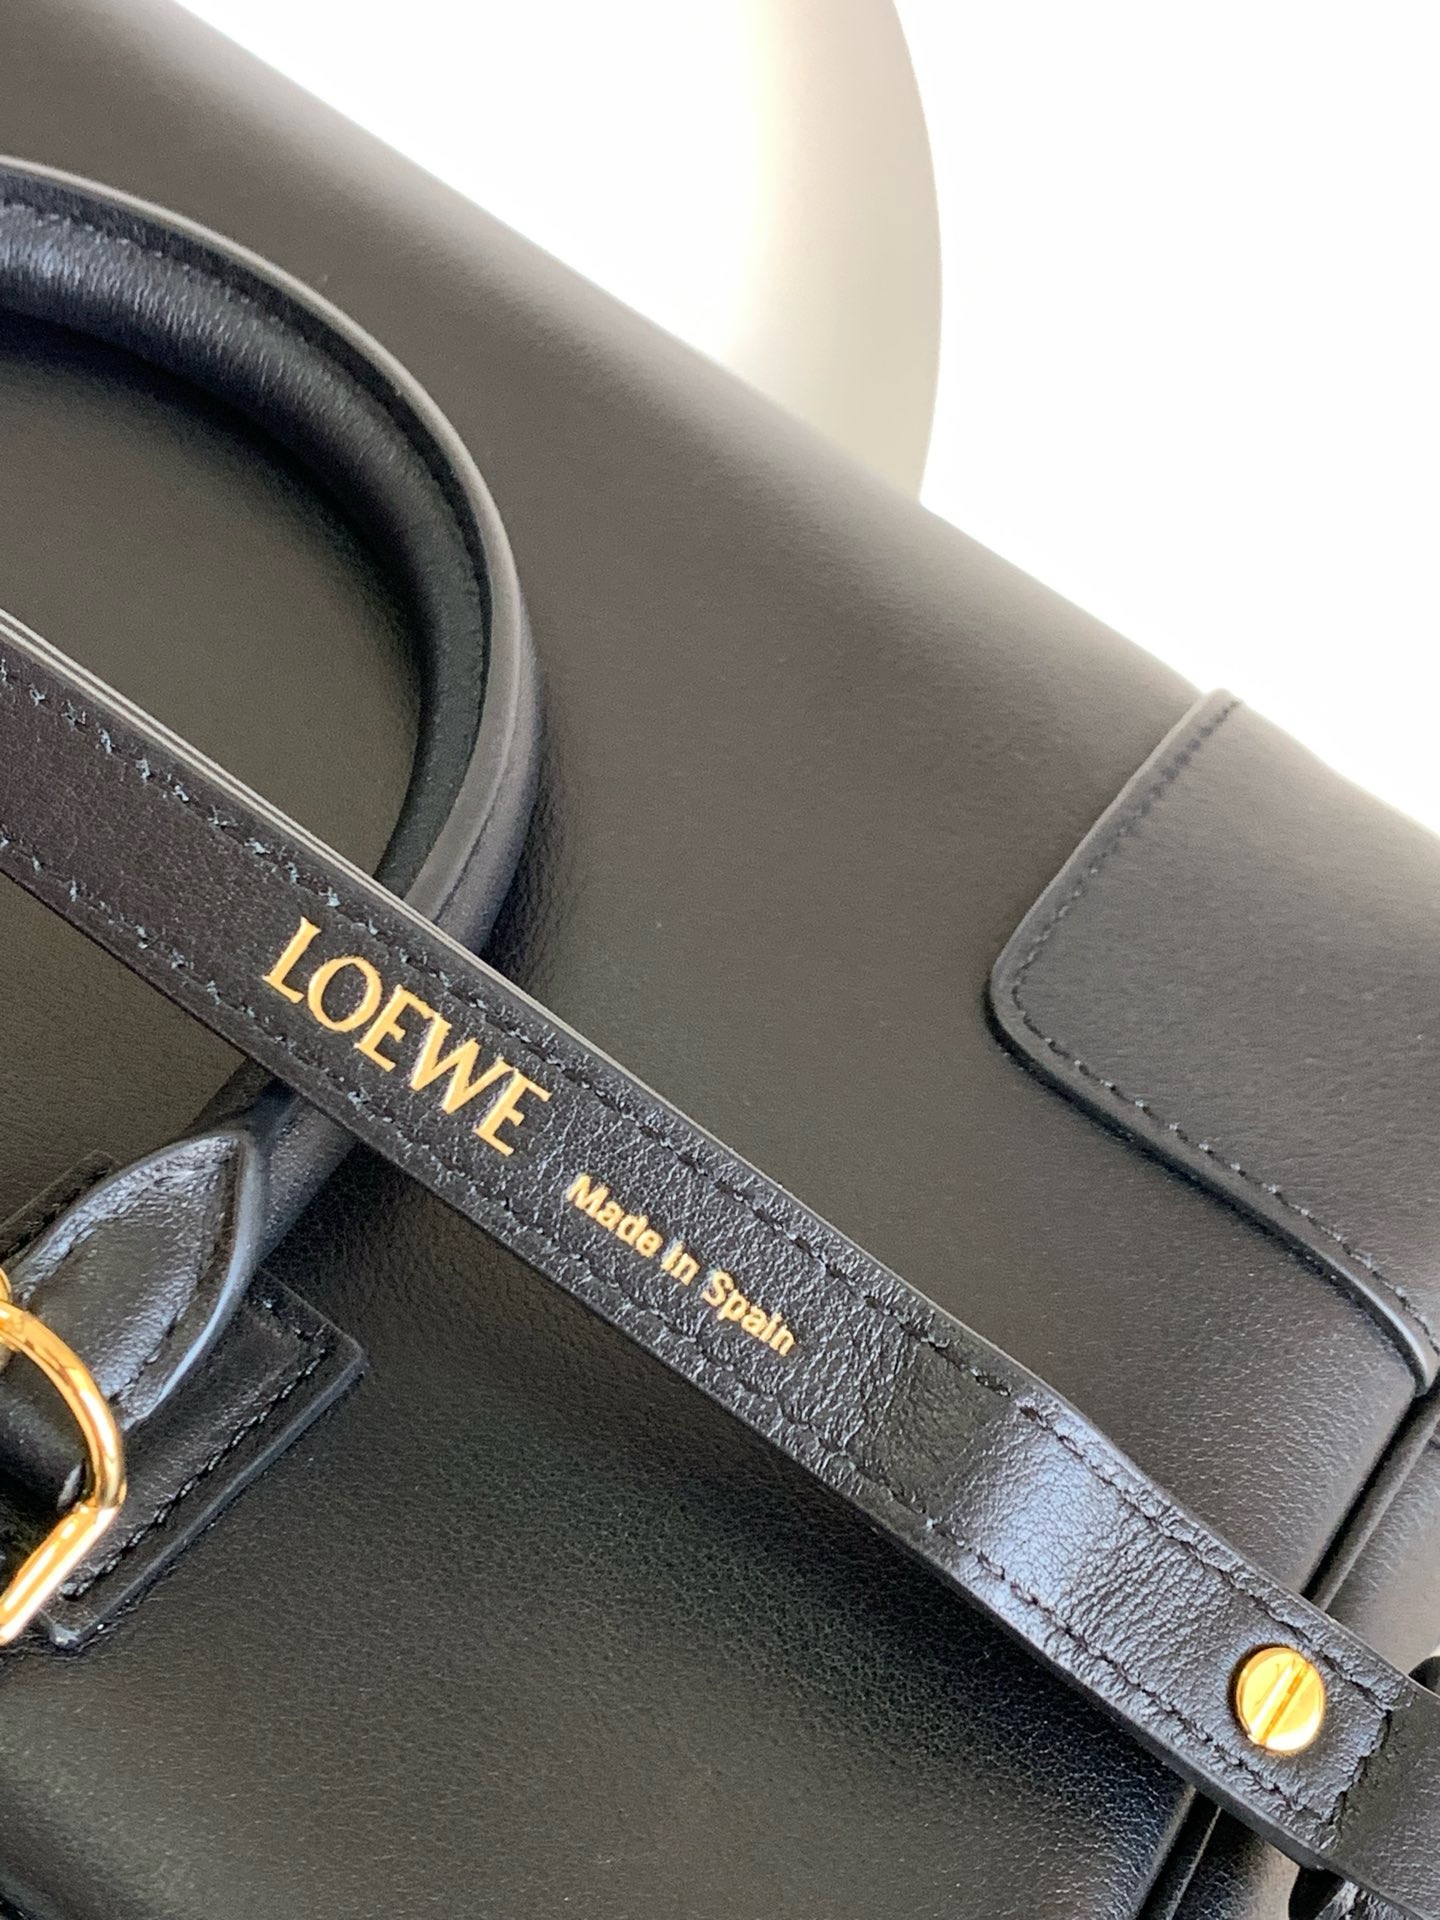 Loewe Original Leather tote A652388 black